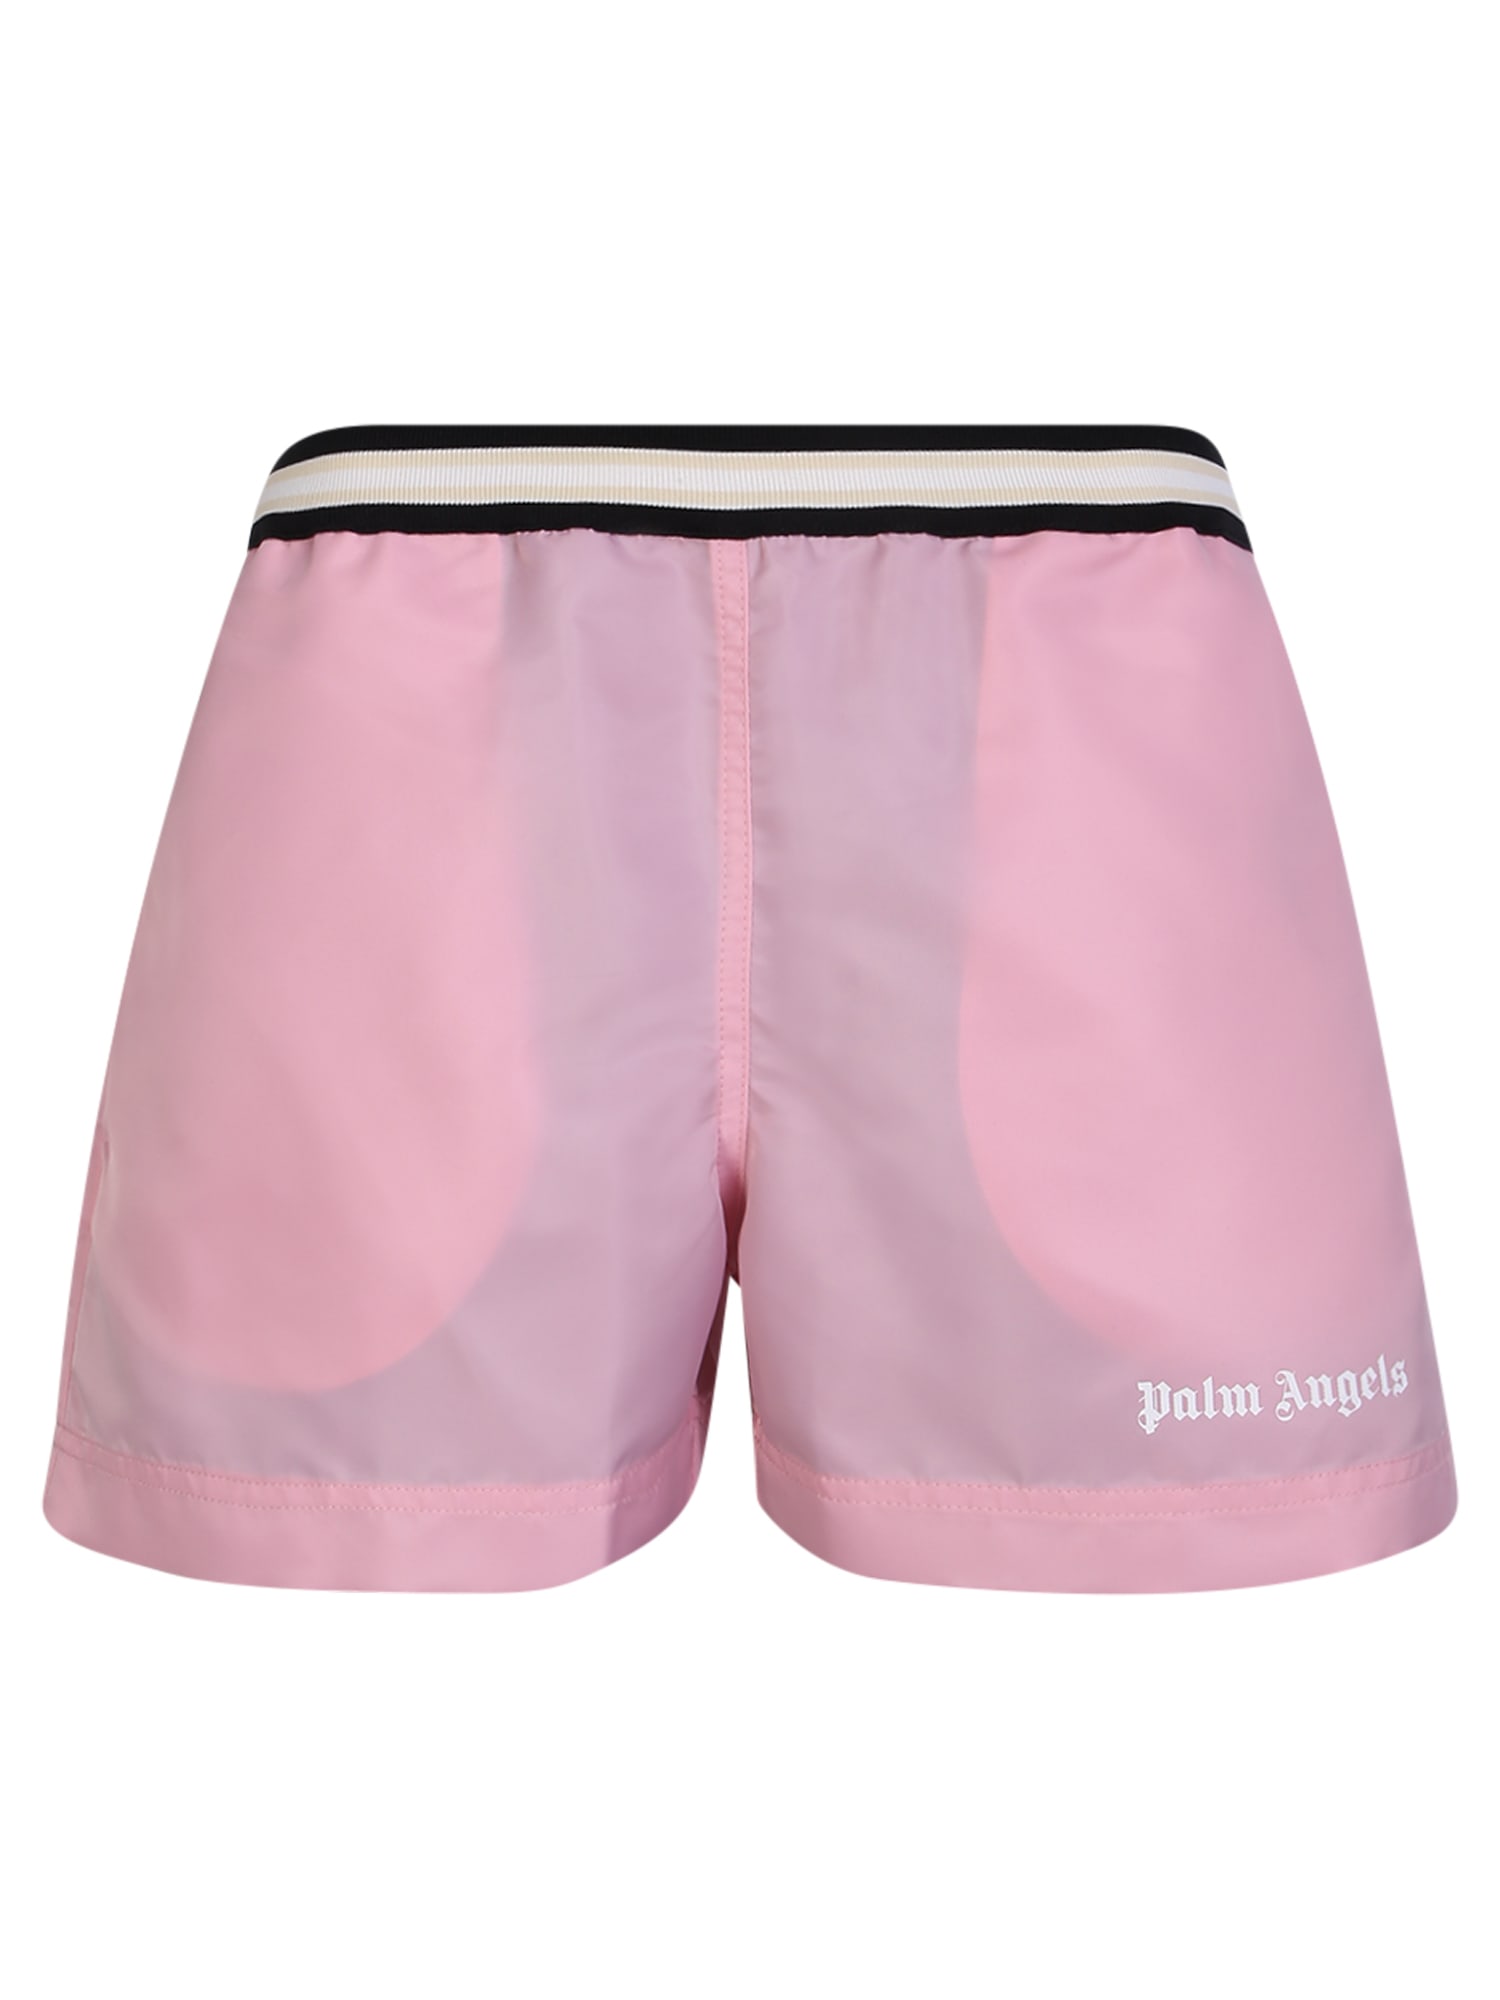 Palm Angels Miami Pink Running Shorts